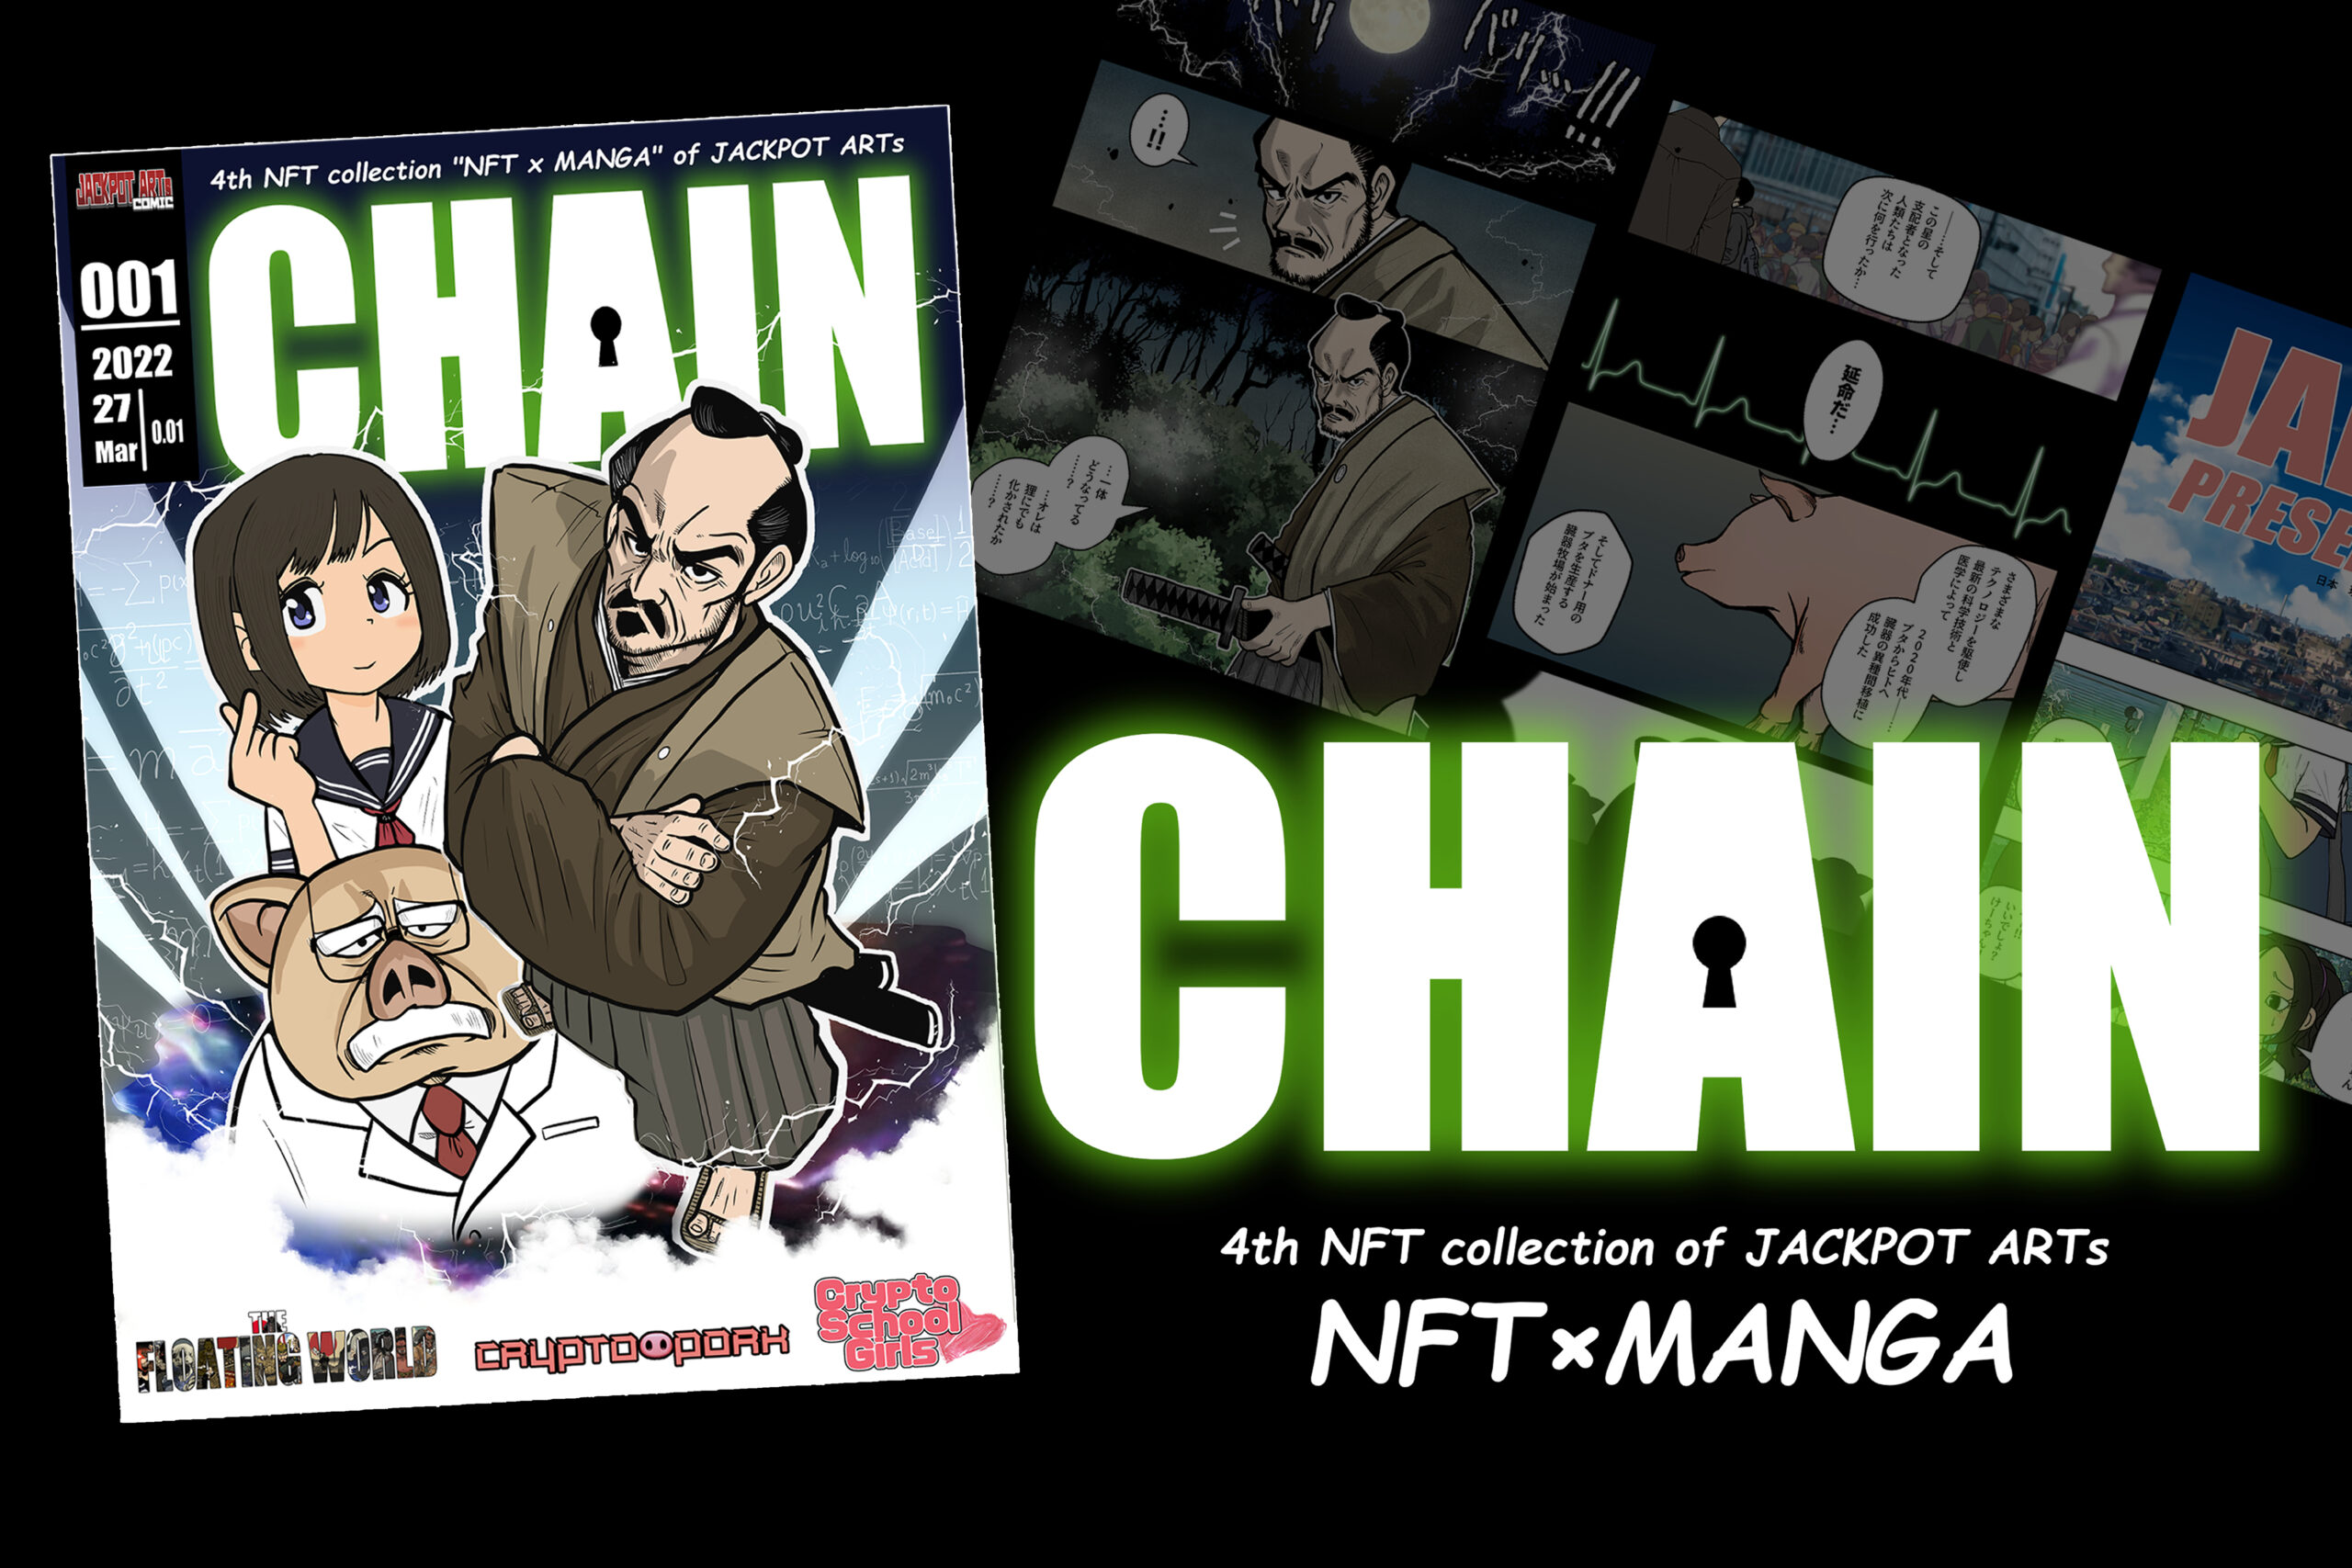 NFT×MANGA “CHAIN” Creation Story & Synopsis